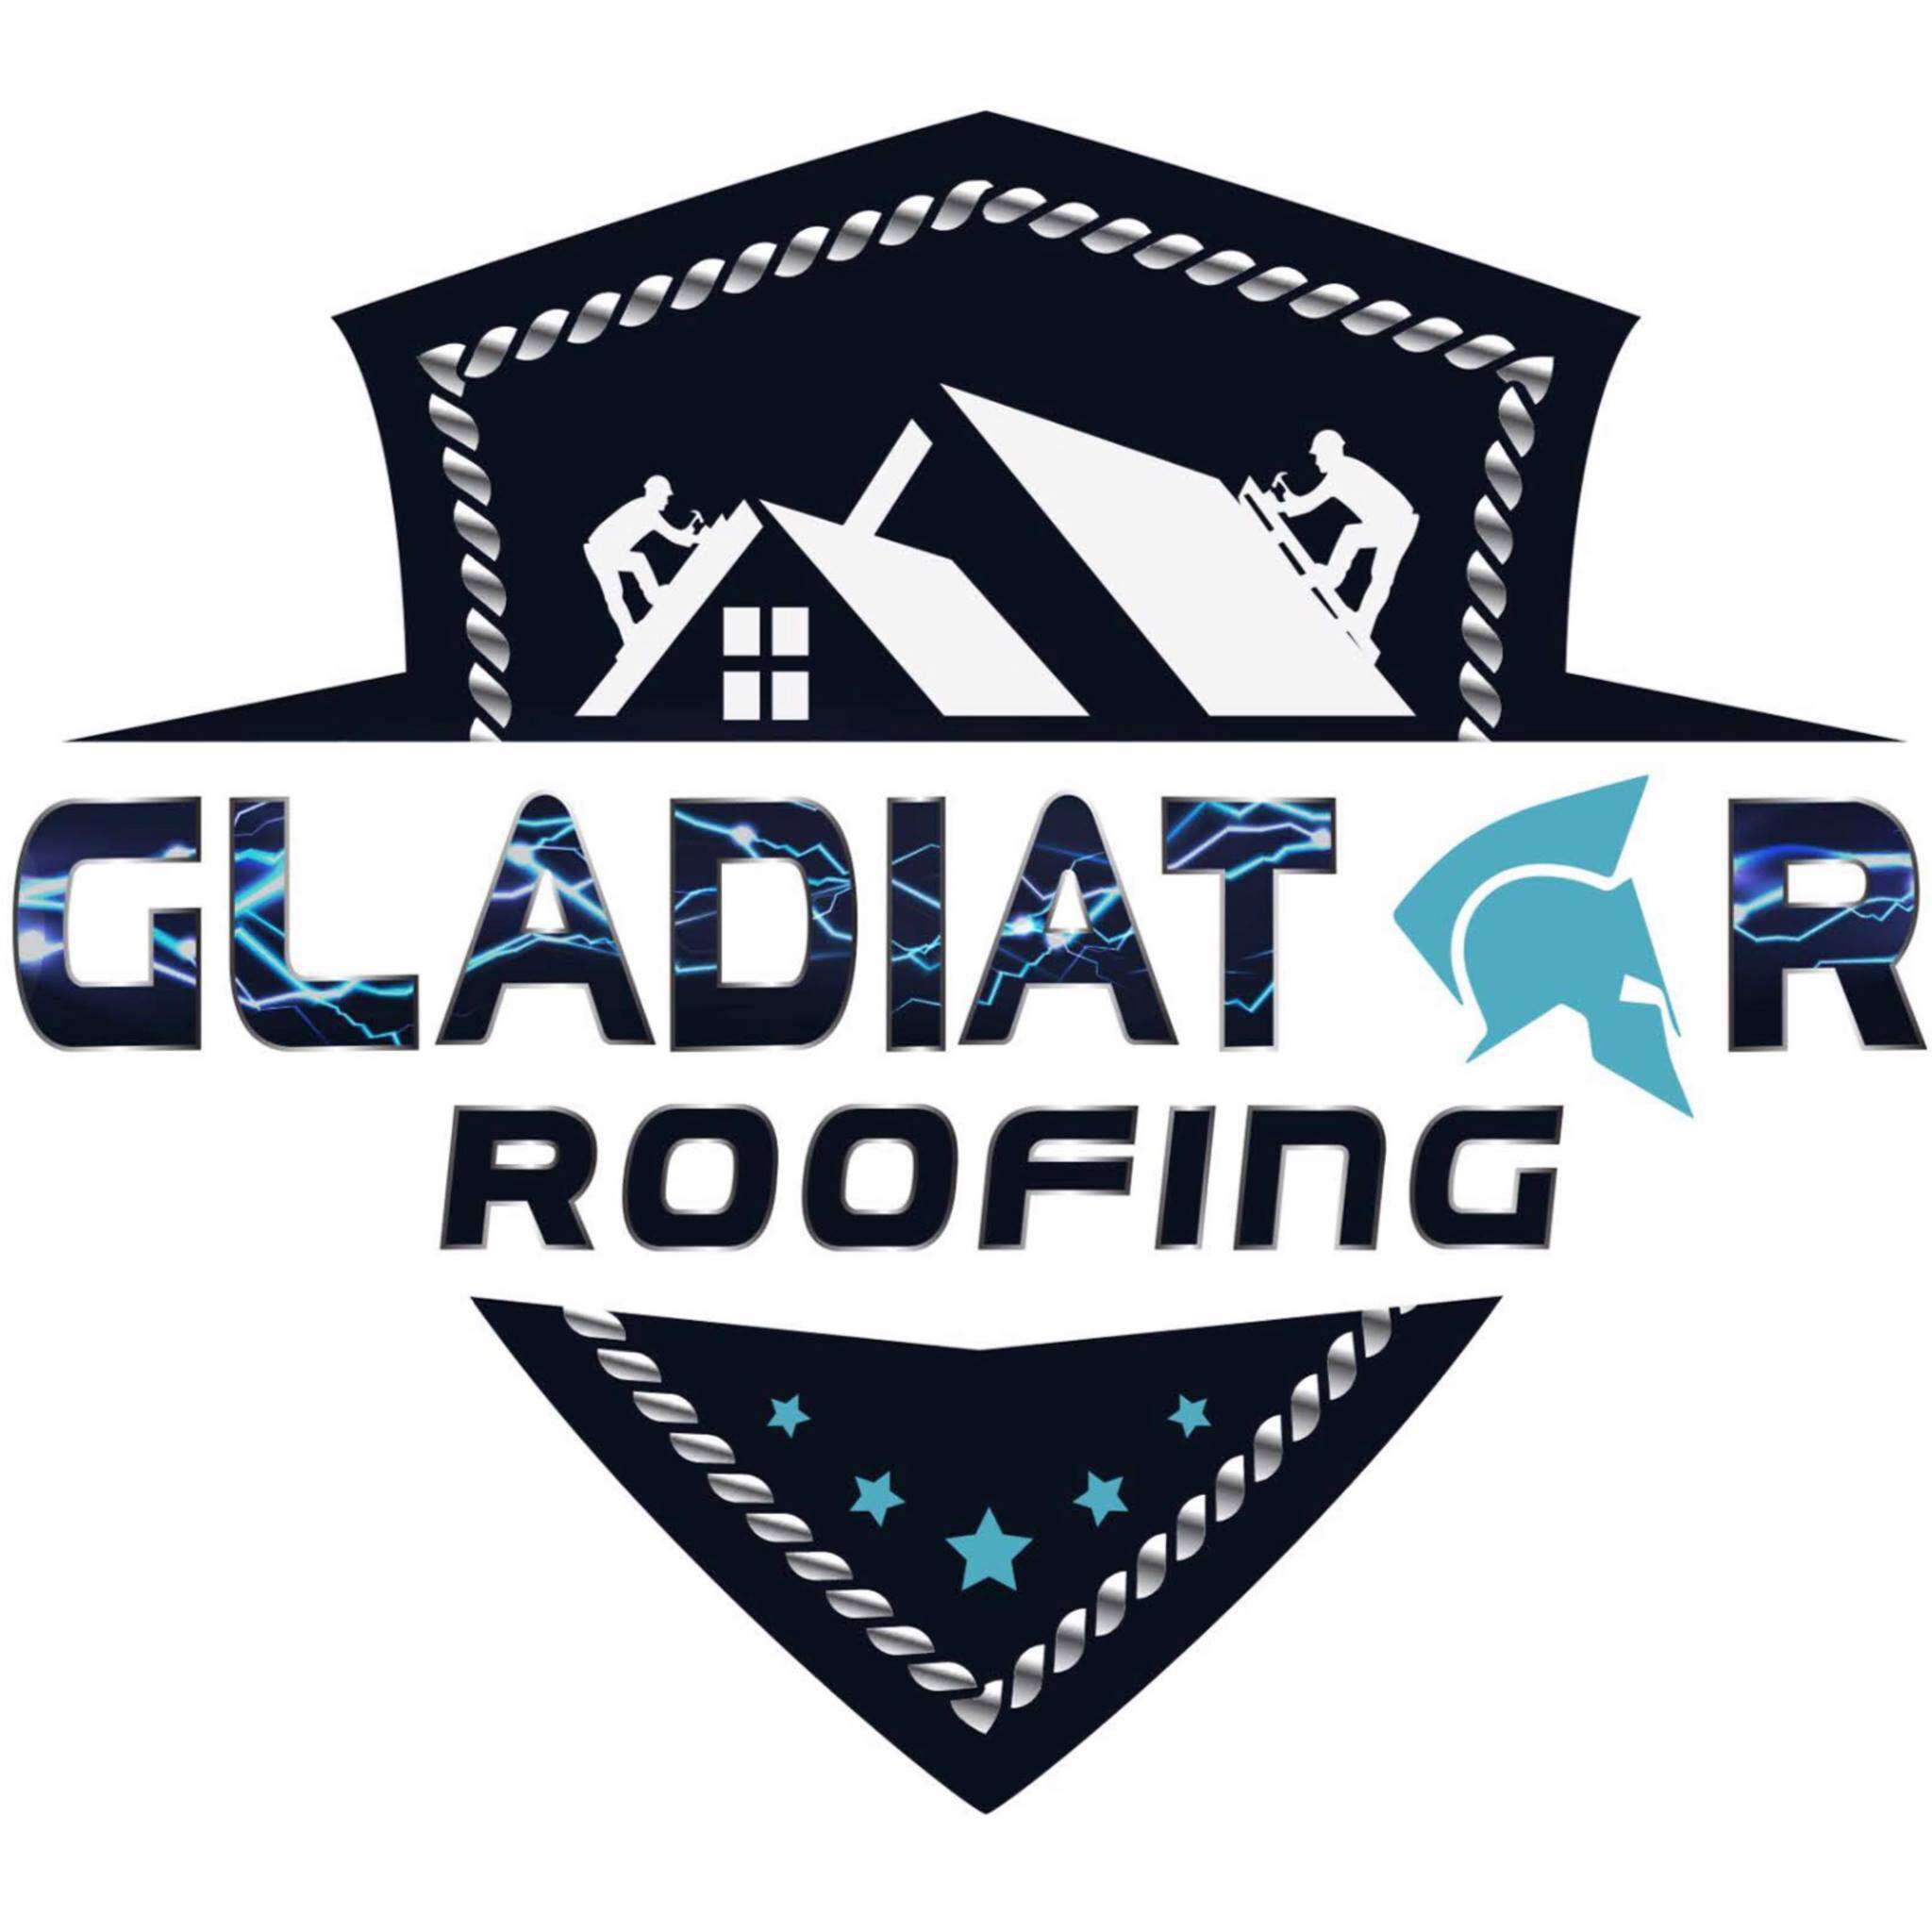 Gladiator Roofing